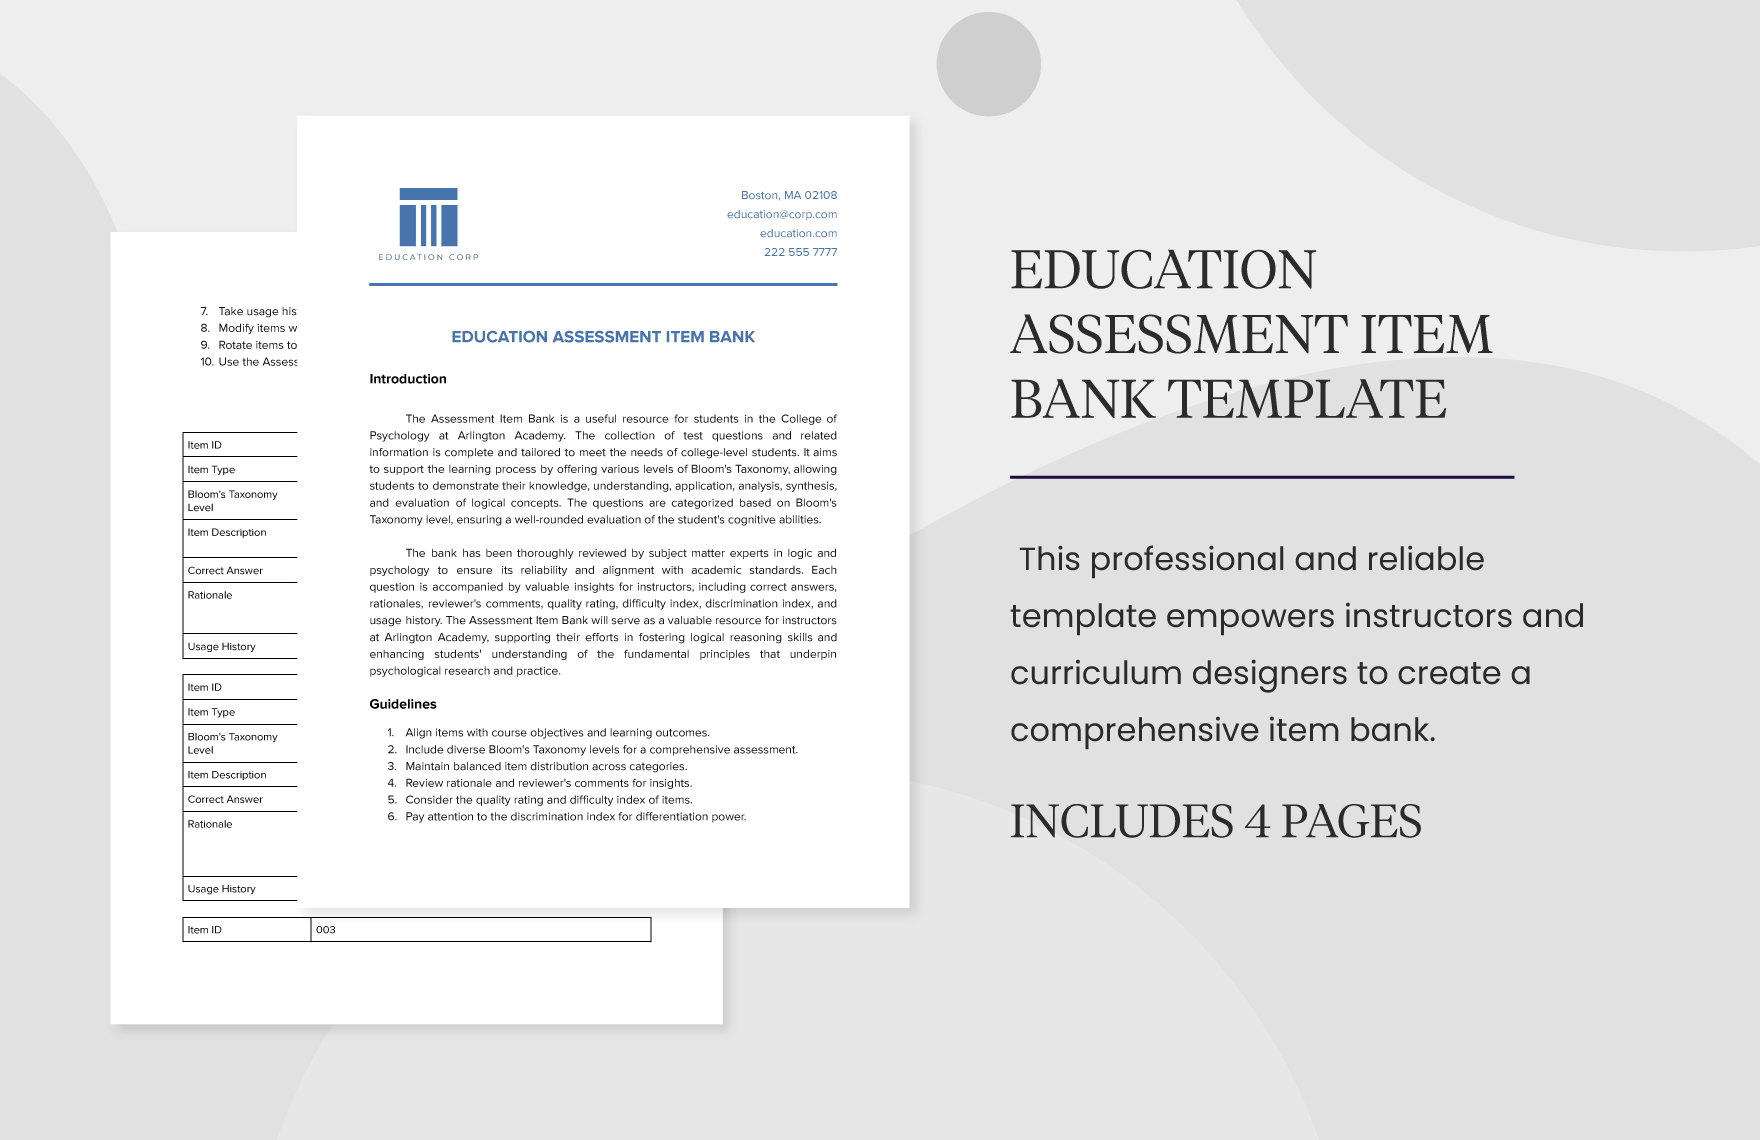 Education Assessment Item Bank Template